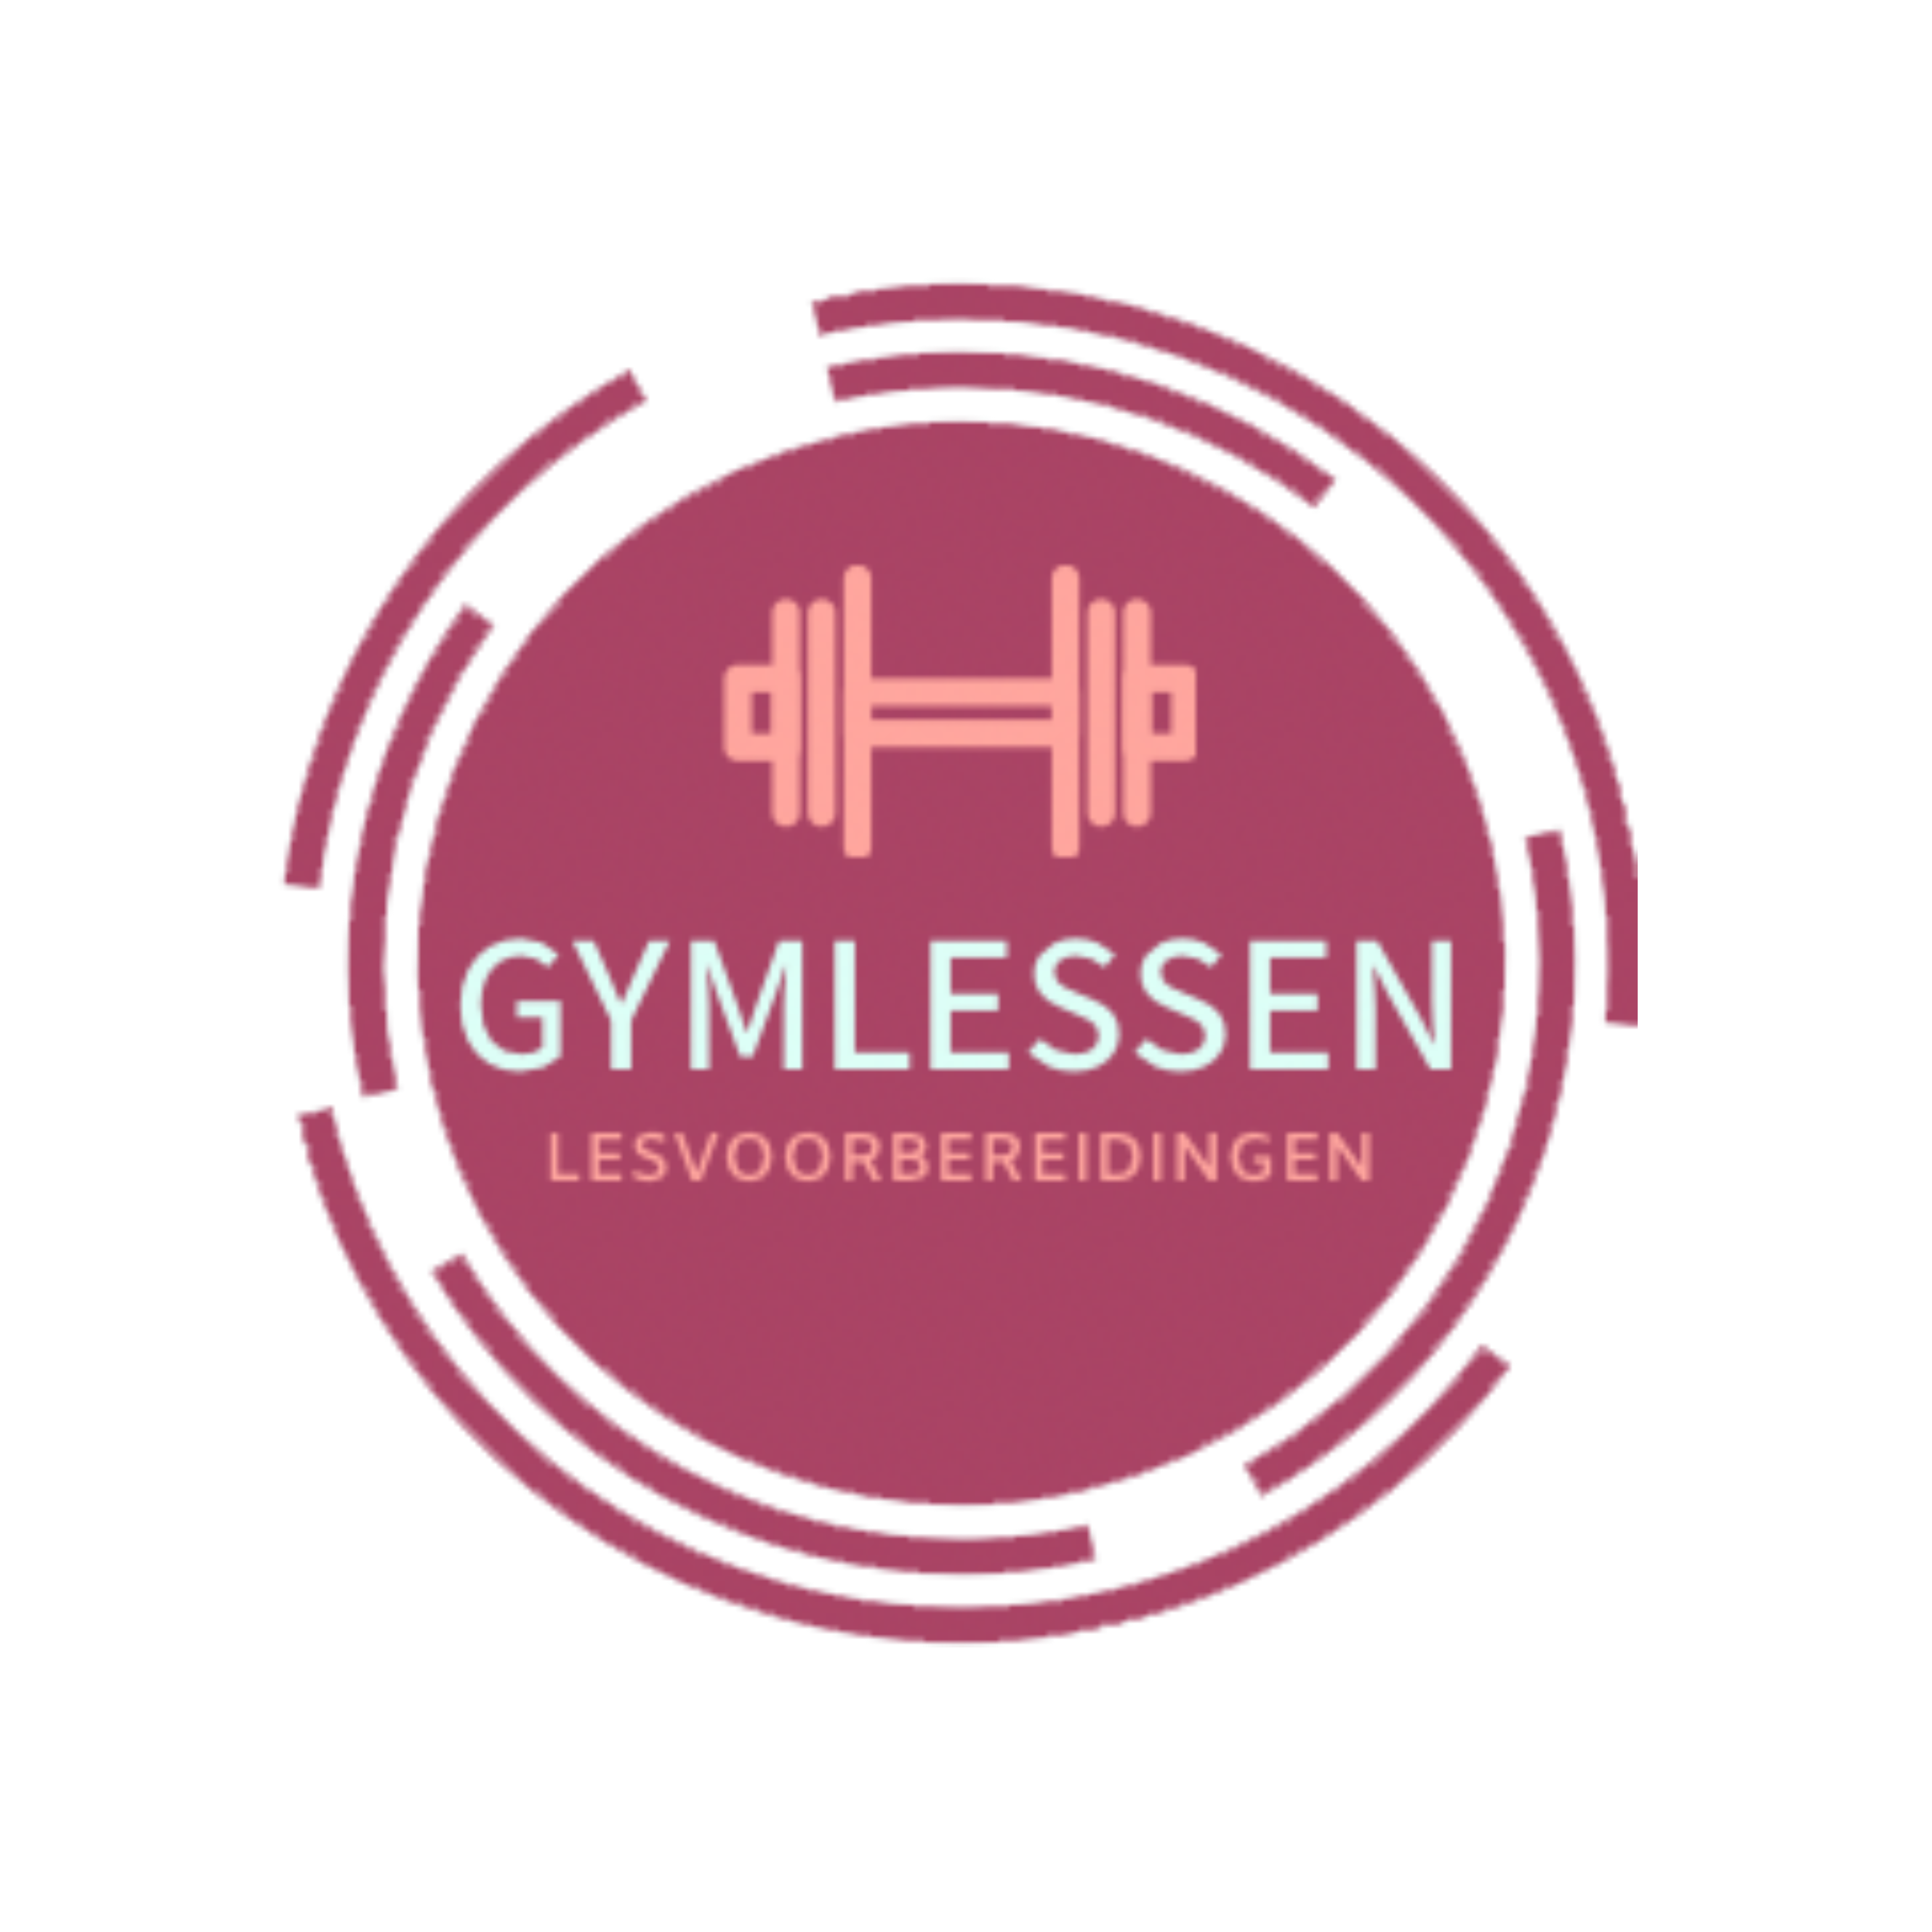 Gymlessen